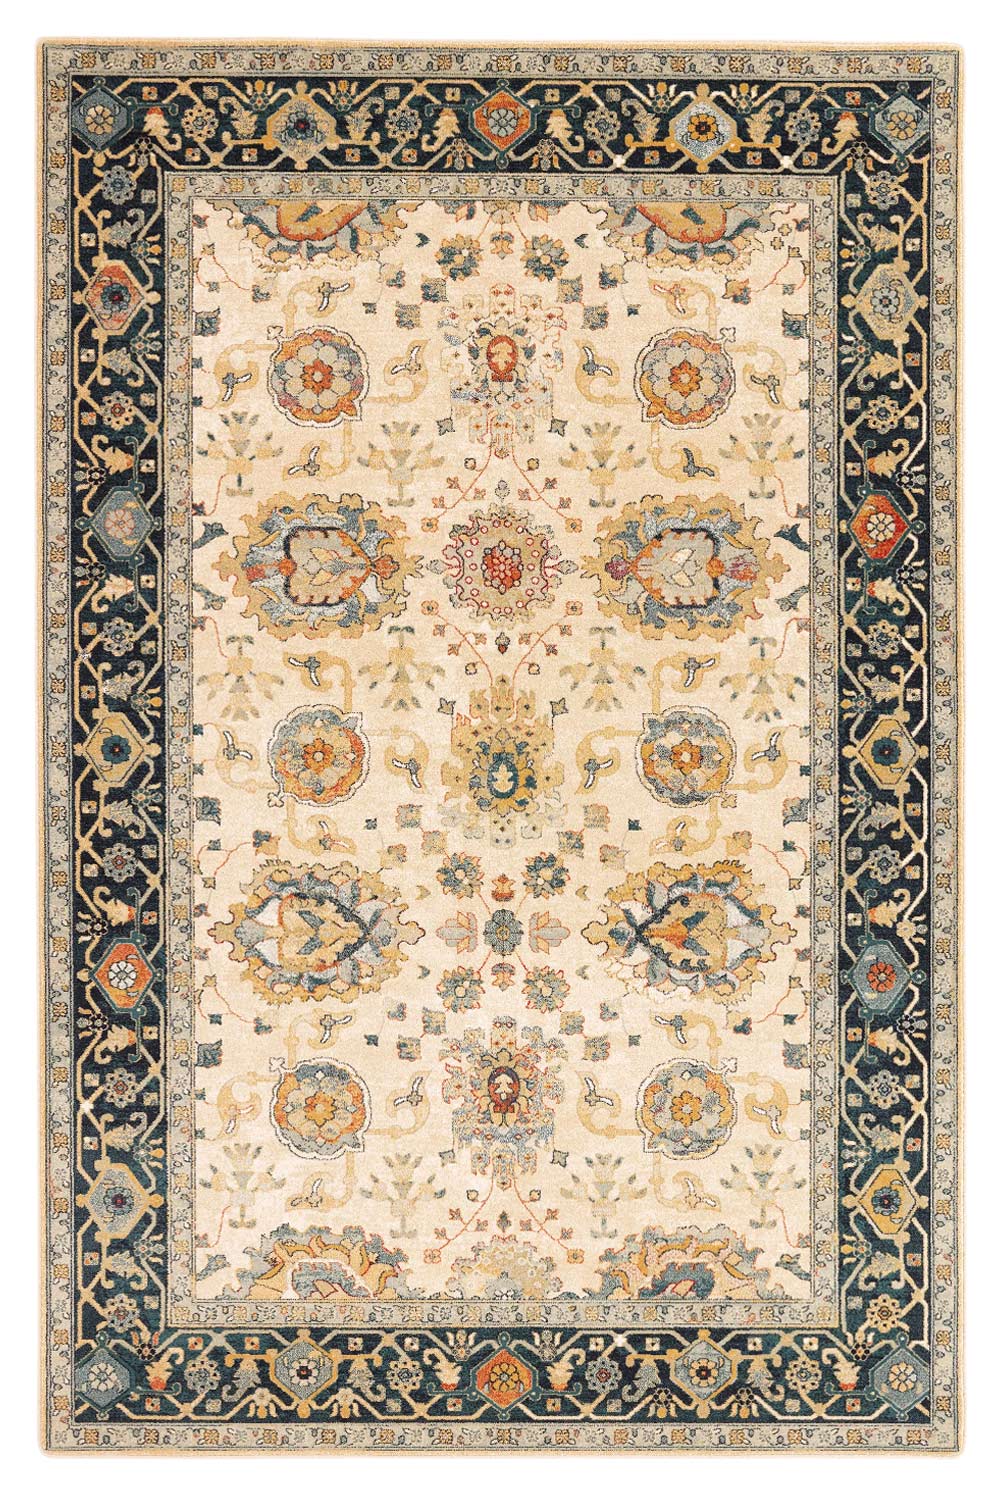 Kusový koberec POLONIA Krolewski Burgund 